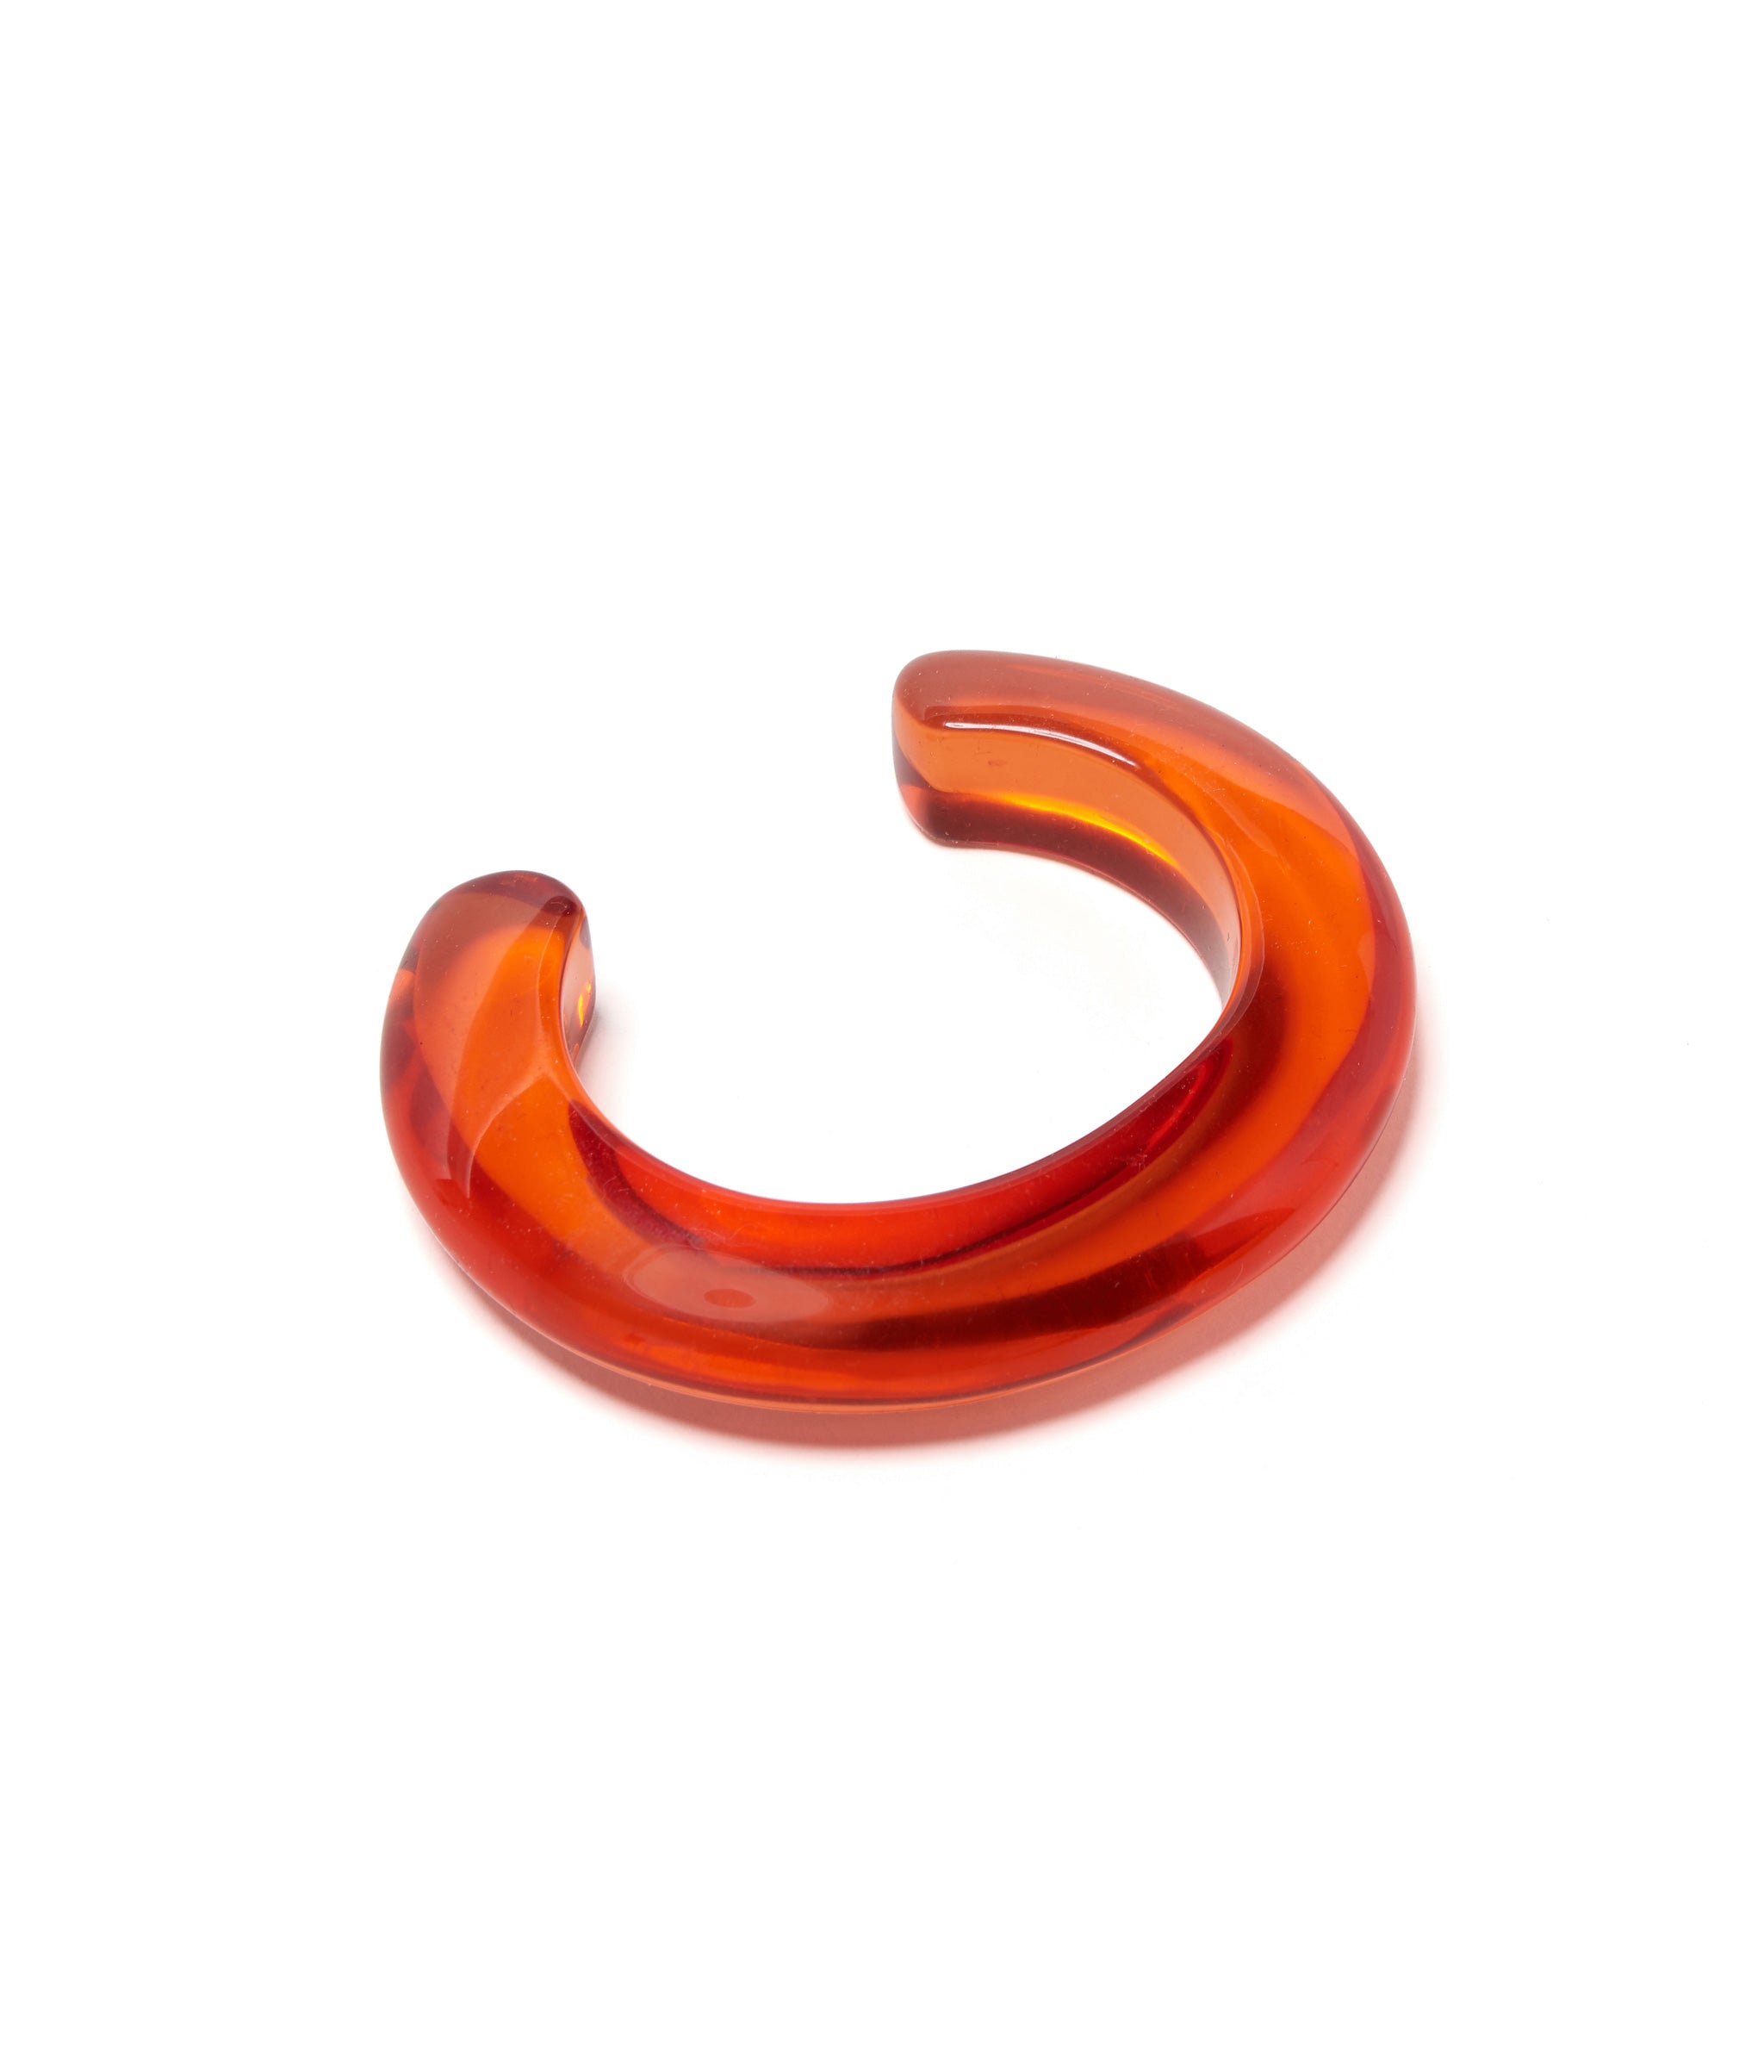 Ridge Cuff in Persimmon. Thin domed cuff bracelet made of juicy orange-hued resin.